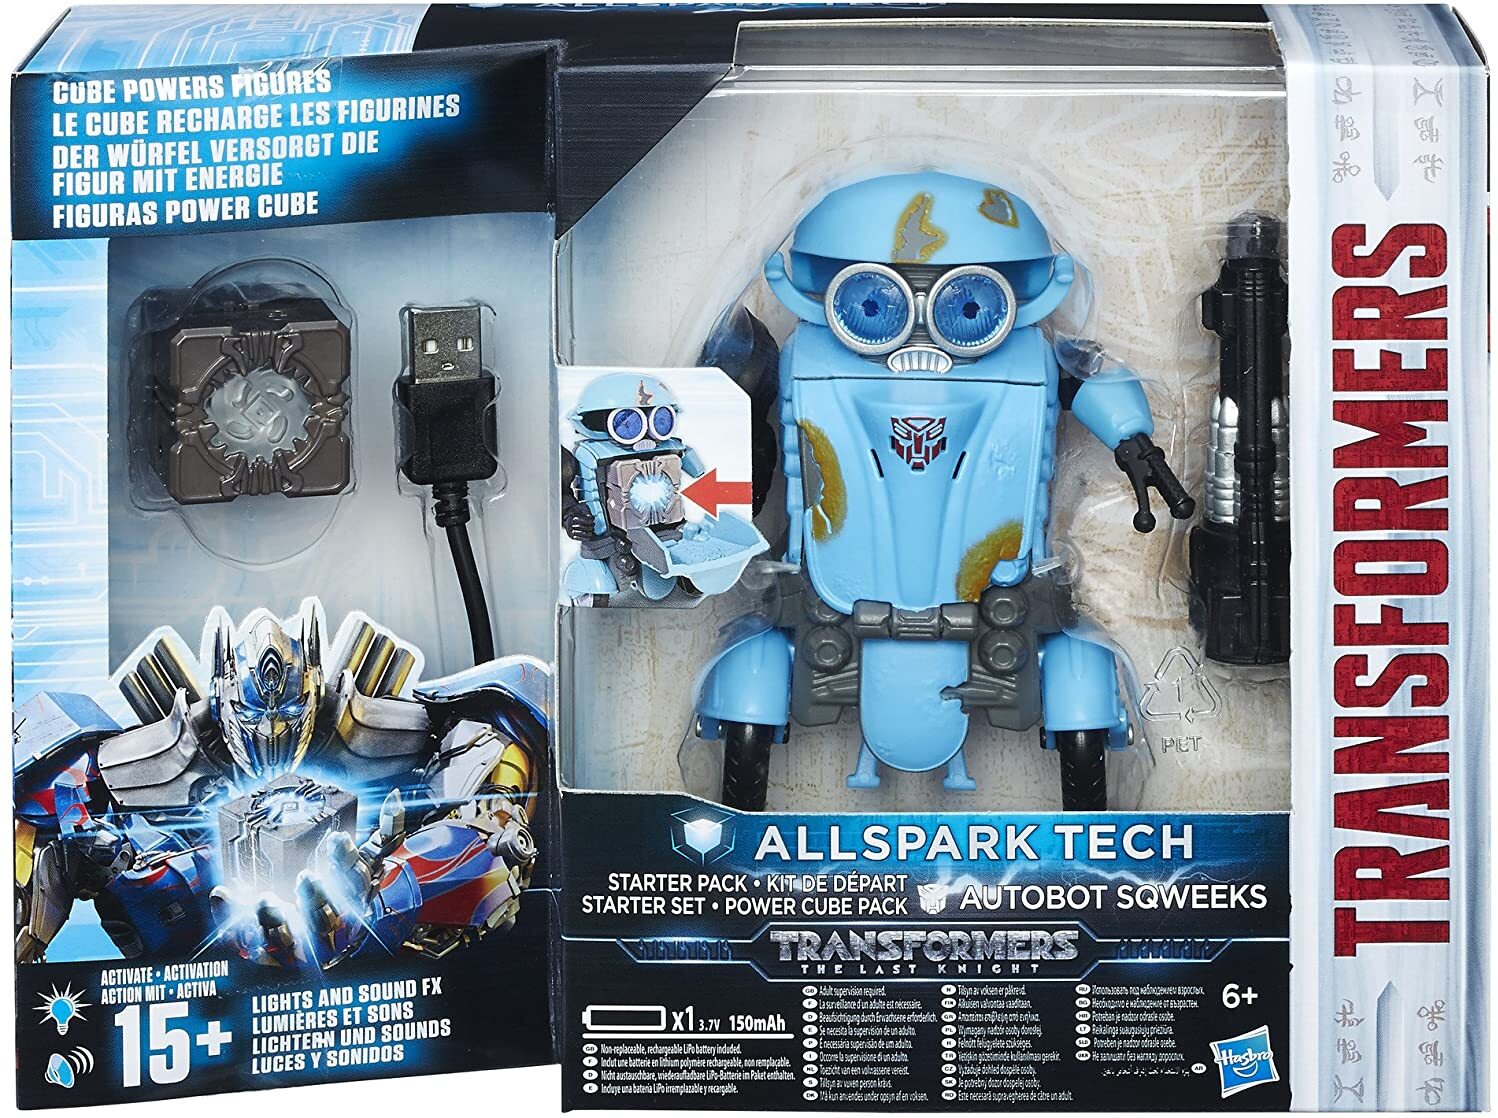 Hasbro Transformers c3481es0 alle Spark Tech Starter Pack Autobot sqweeks Figur